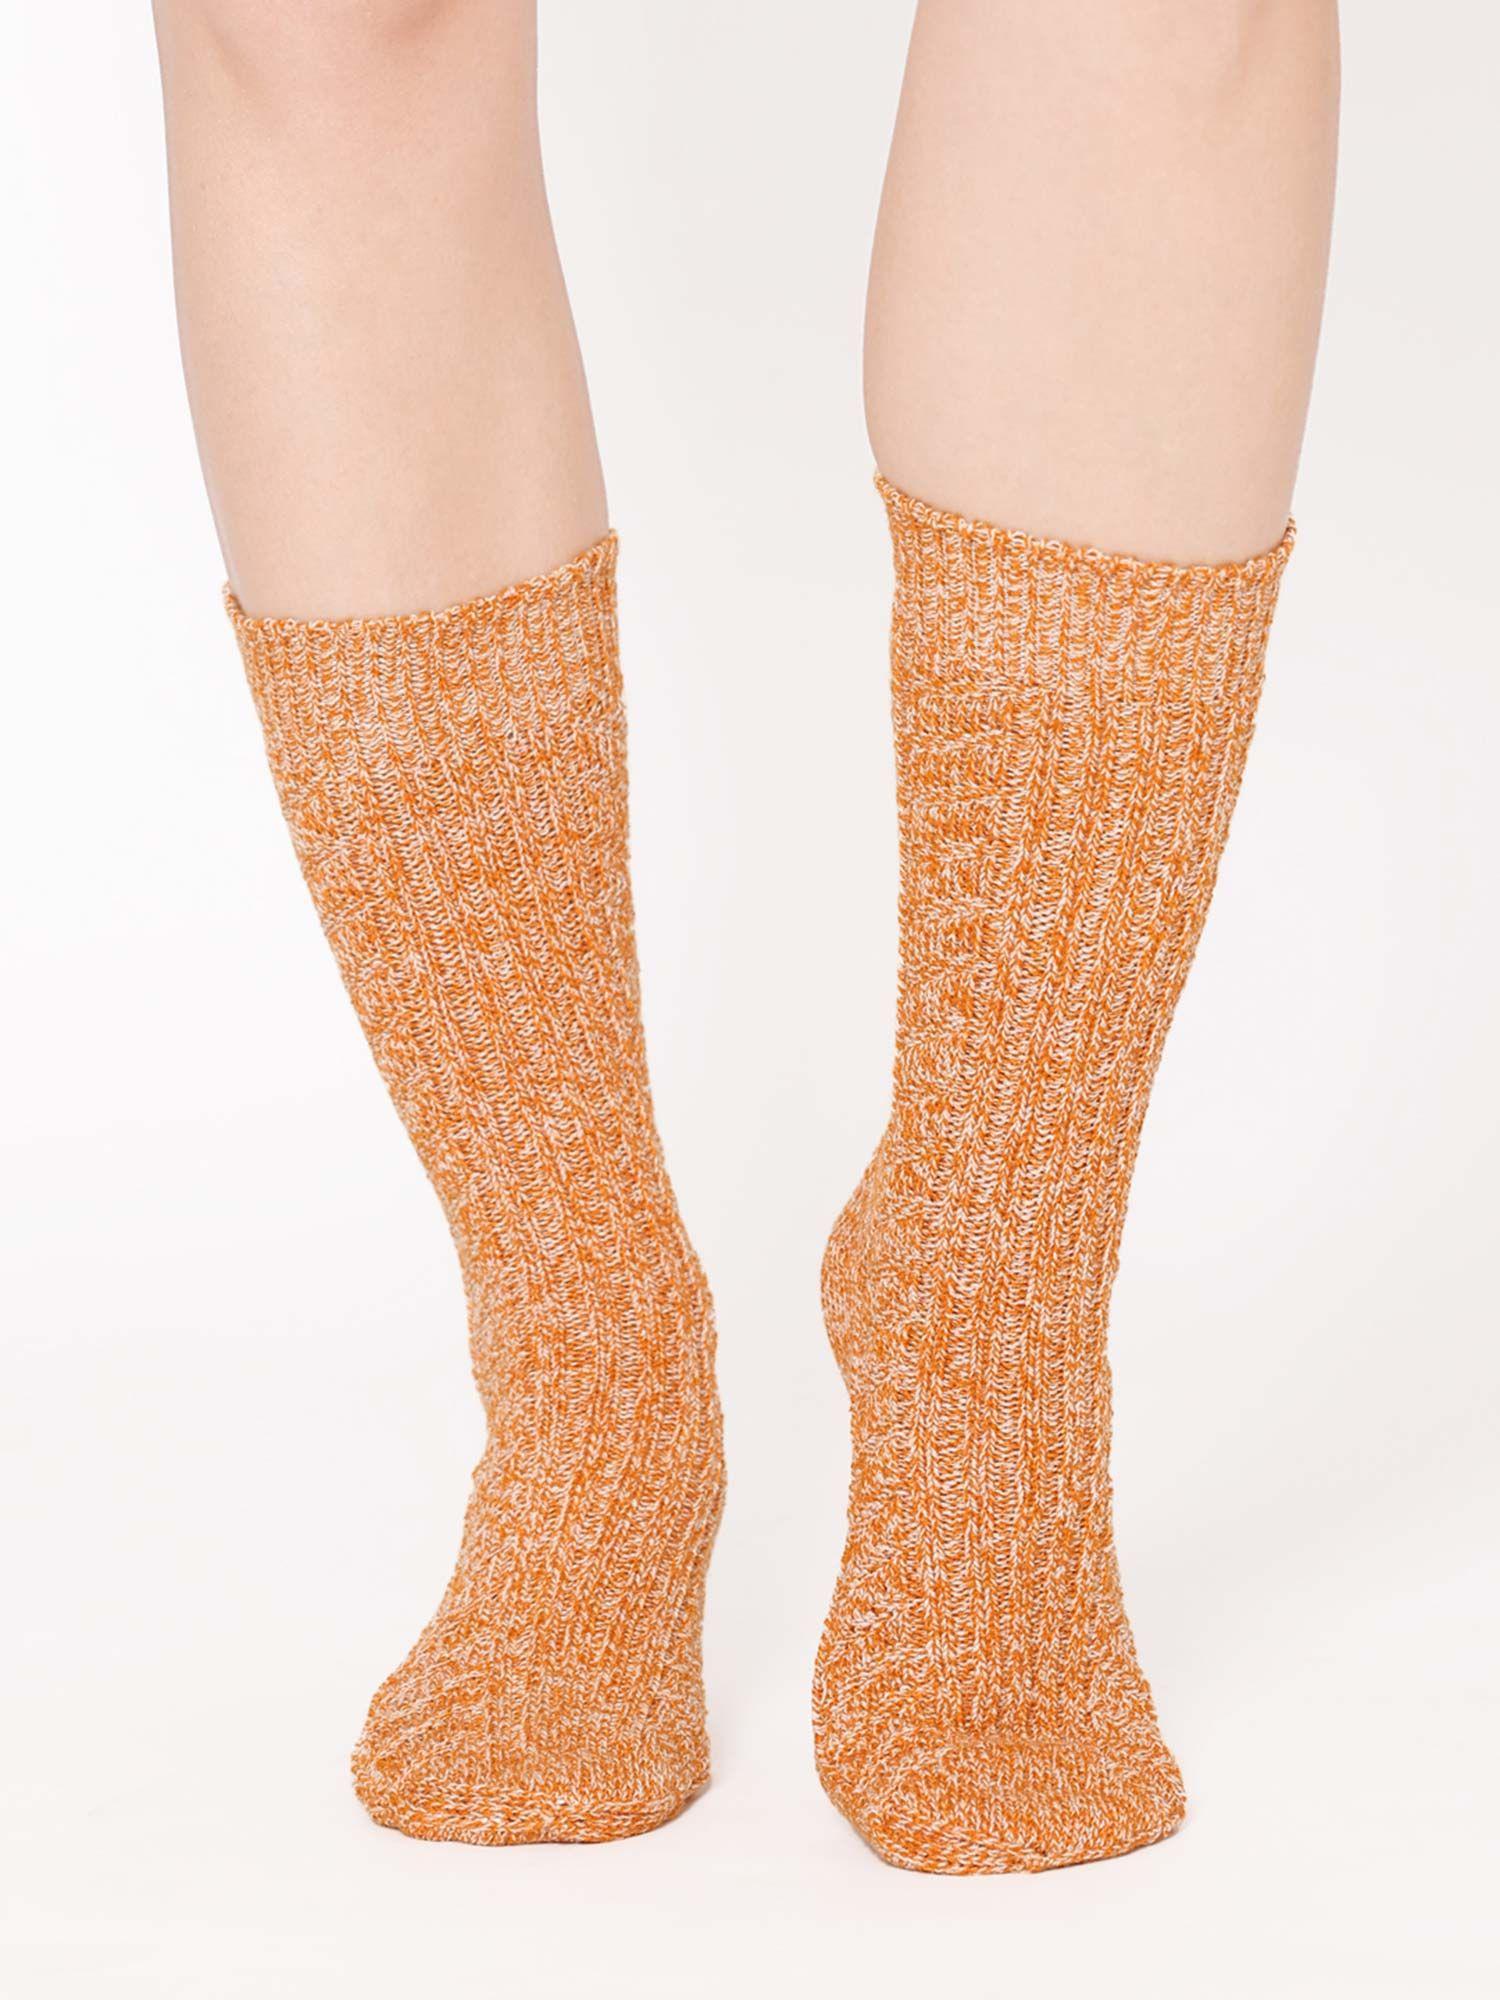 heathered orange fine knitted calf length winter woolen socks